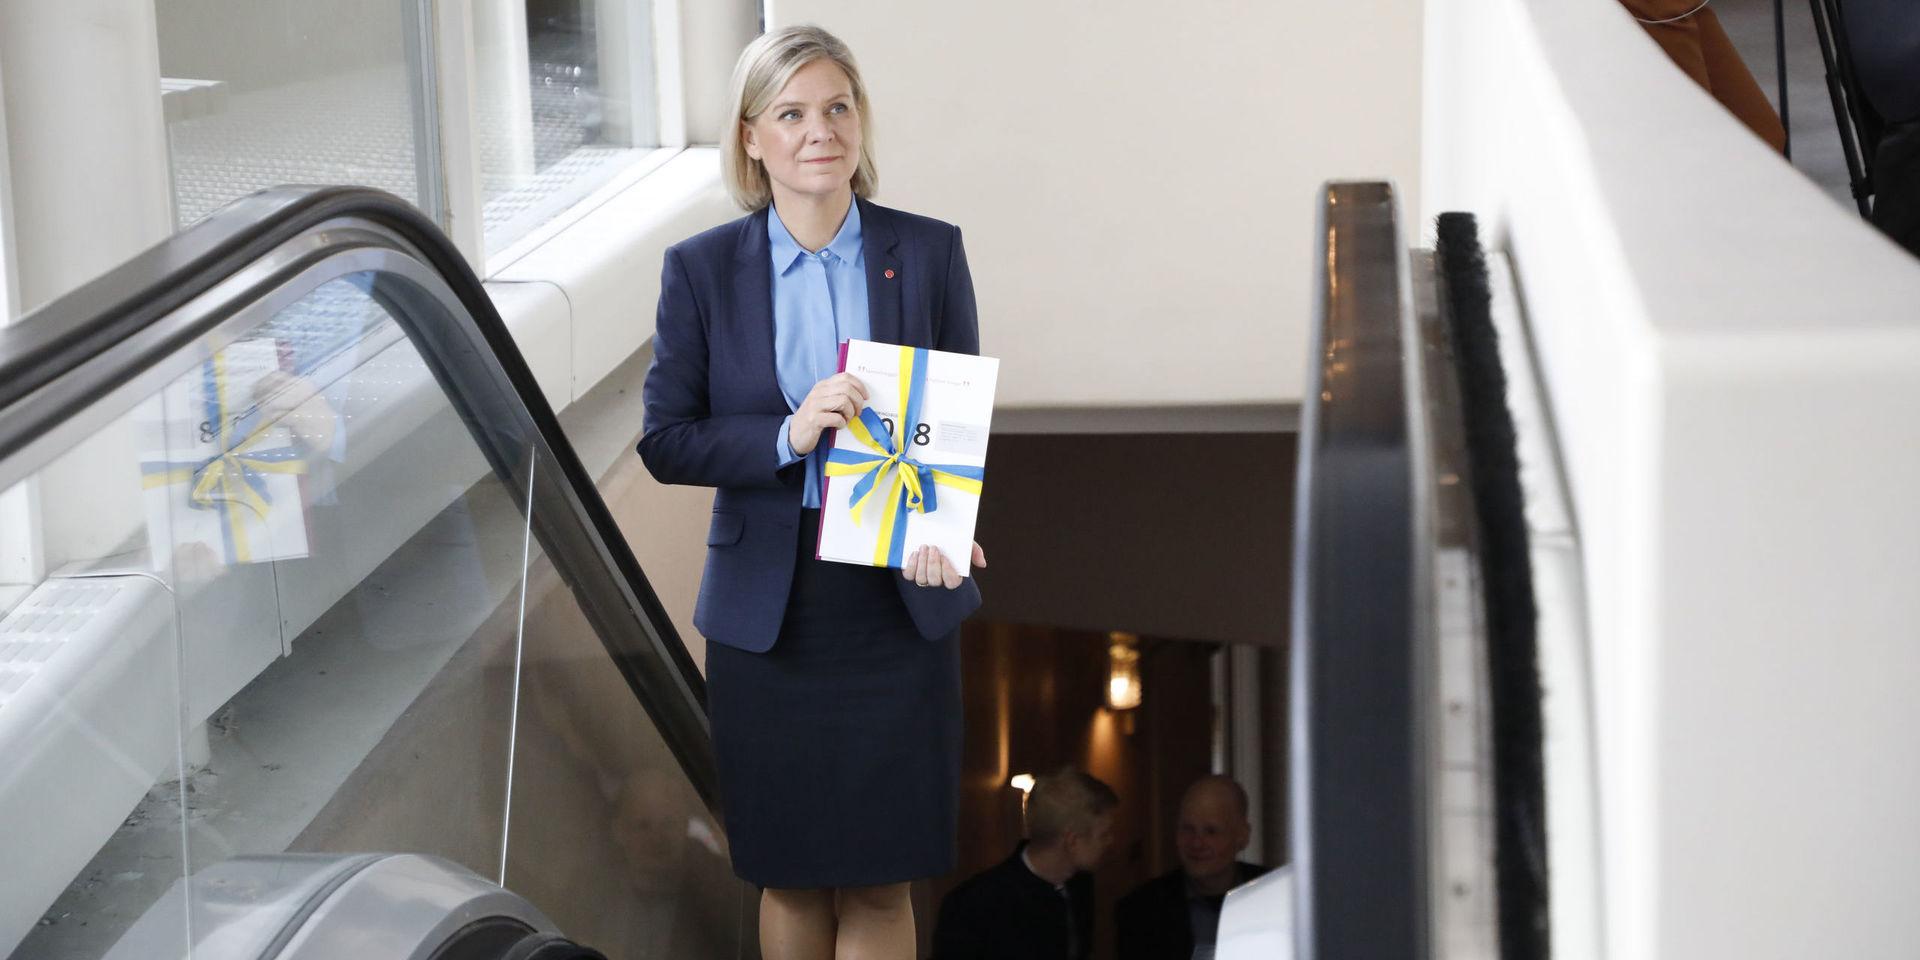 STOCKHOLM 20180415 Finansminister Magdalena Andersson (S) kommer riksdagen med regeringens ekonomiska vårproposition.
Foto Christine Olsson / TT kod 10430